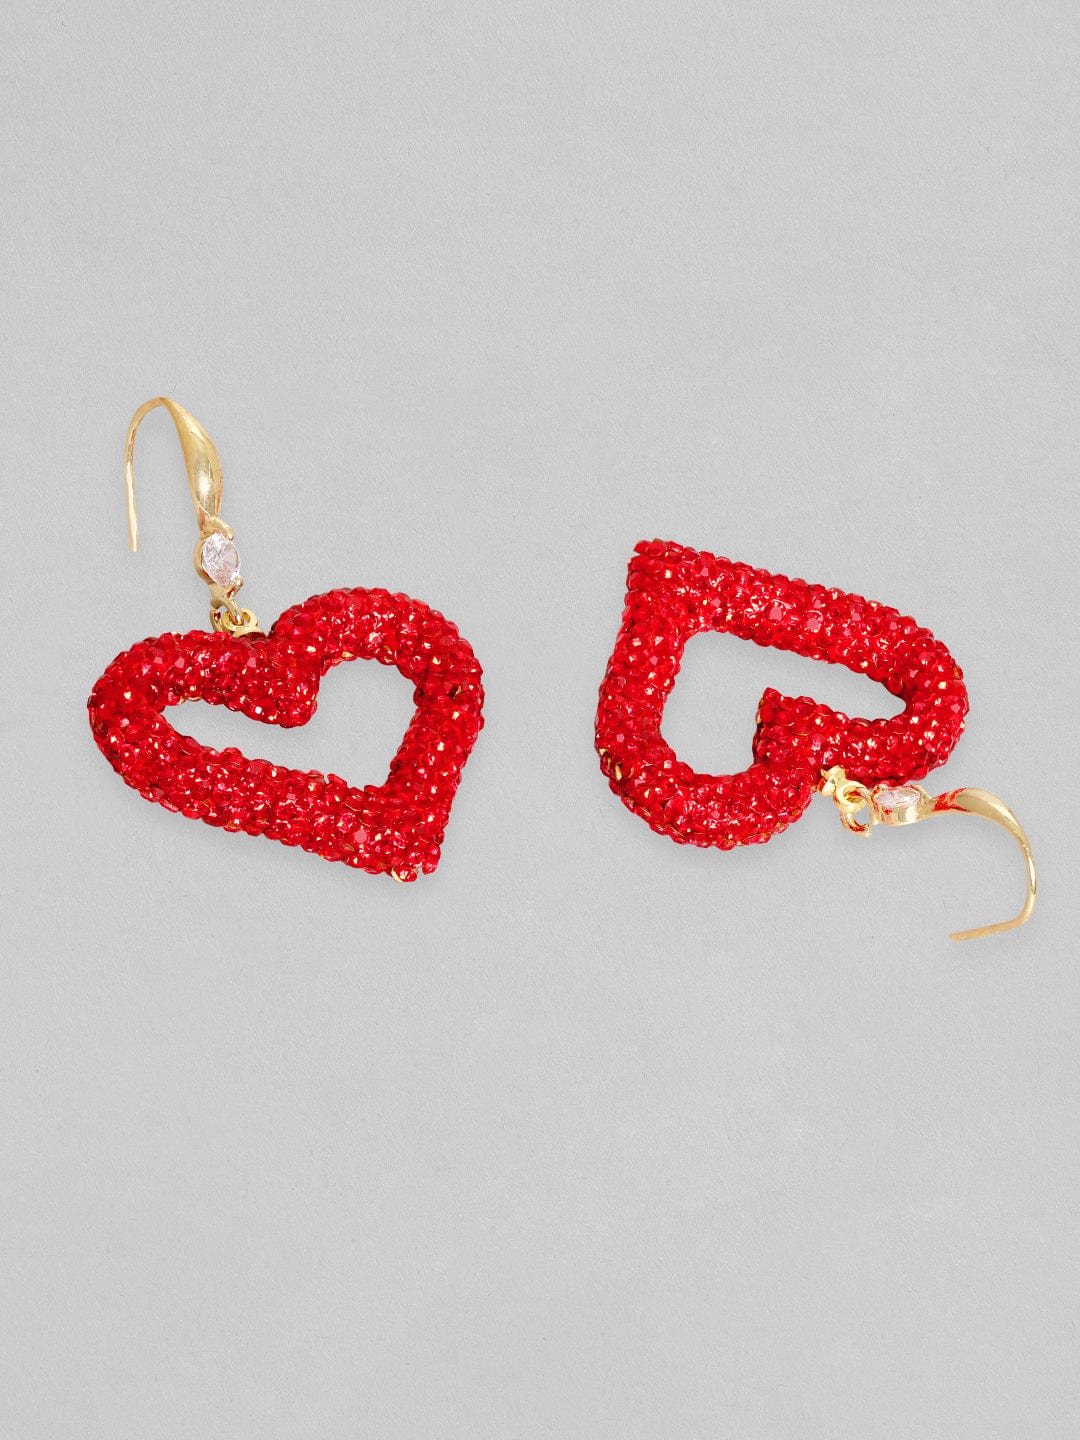 Rubans Voguish Pink Pave Crystal Studded Heart Motif Dangle Earrings Earrings